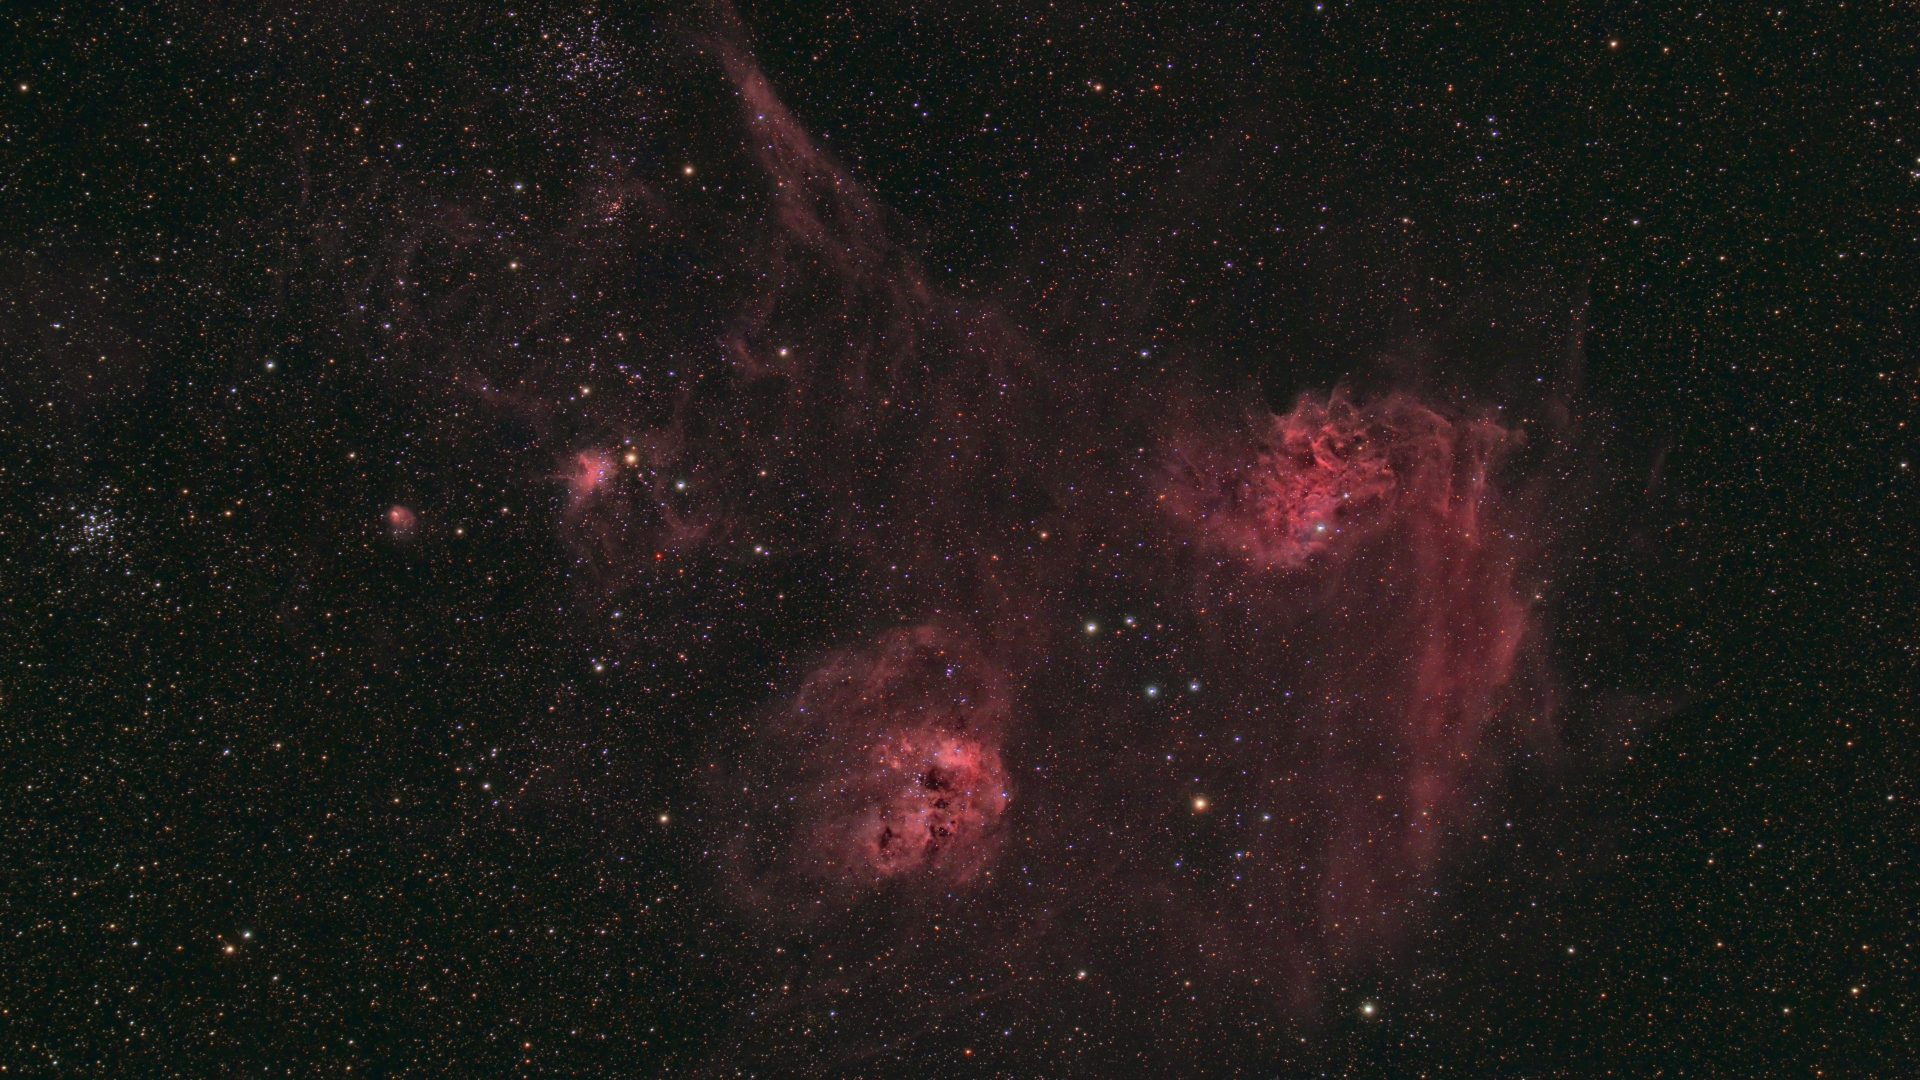 Tadpoles and Flaming Star Nebula